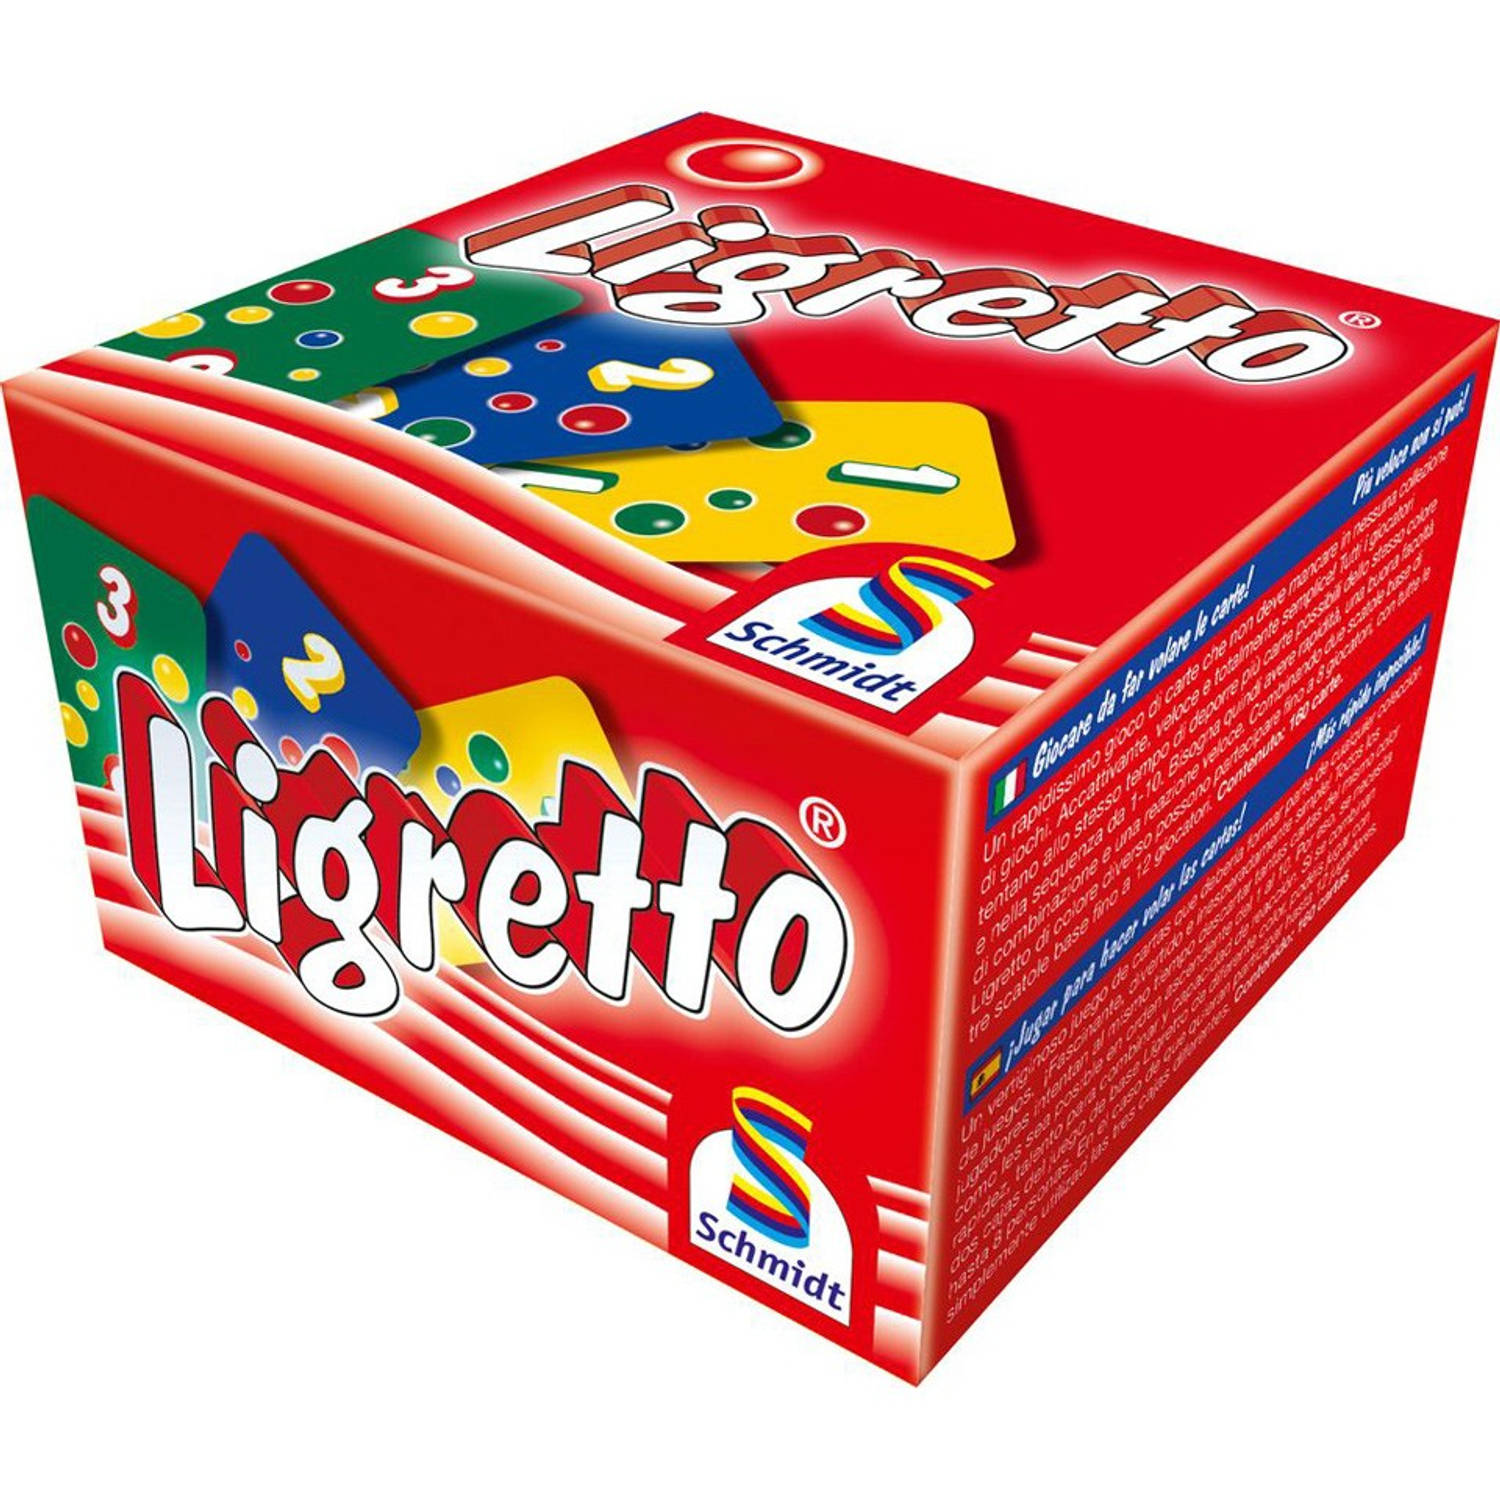 grind worst Fonetiek Ligretto rood | Blokker